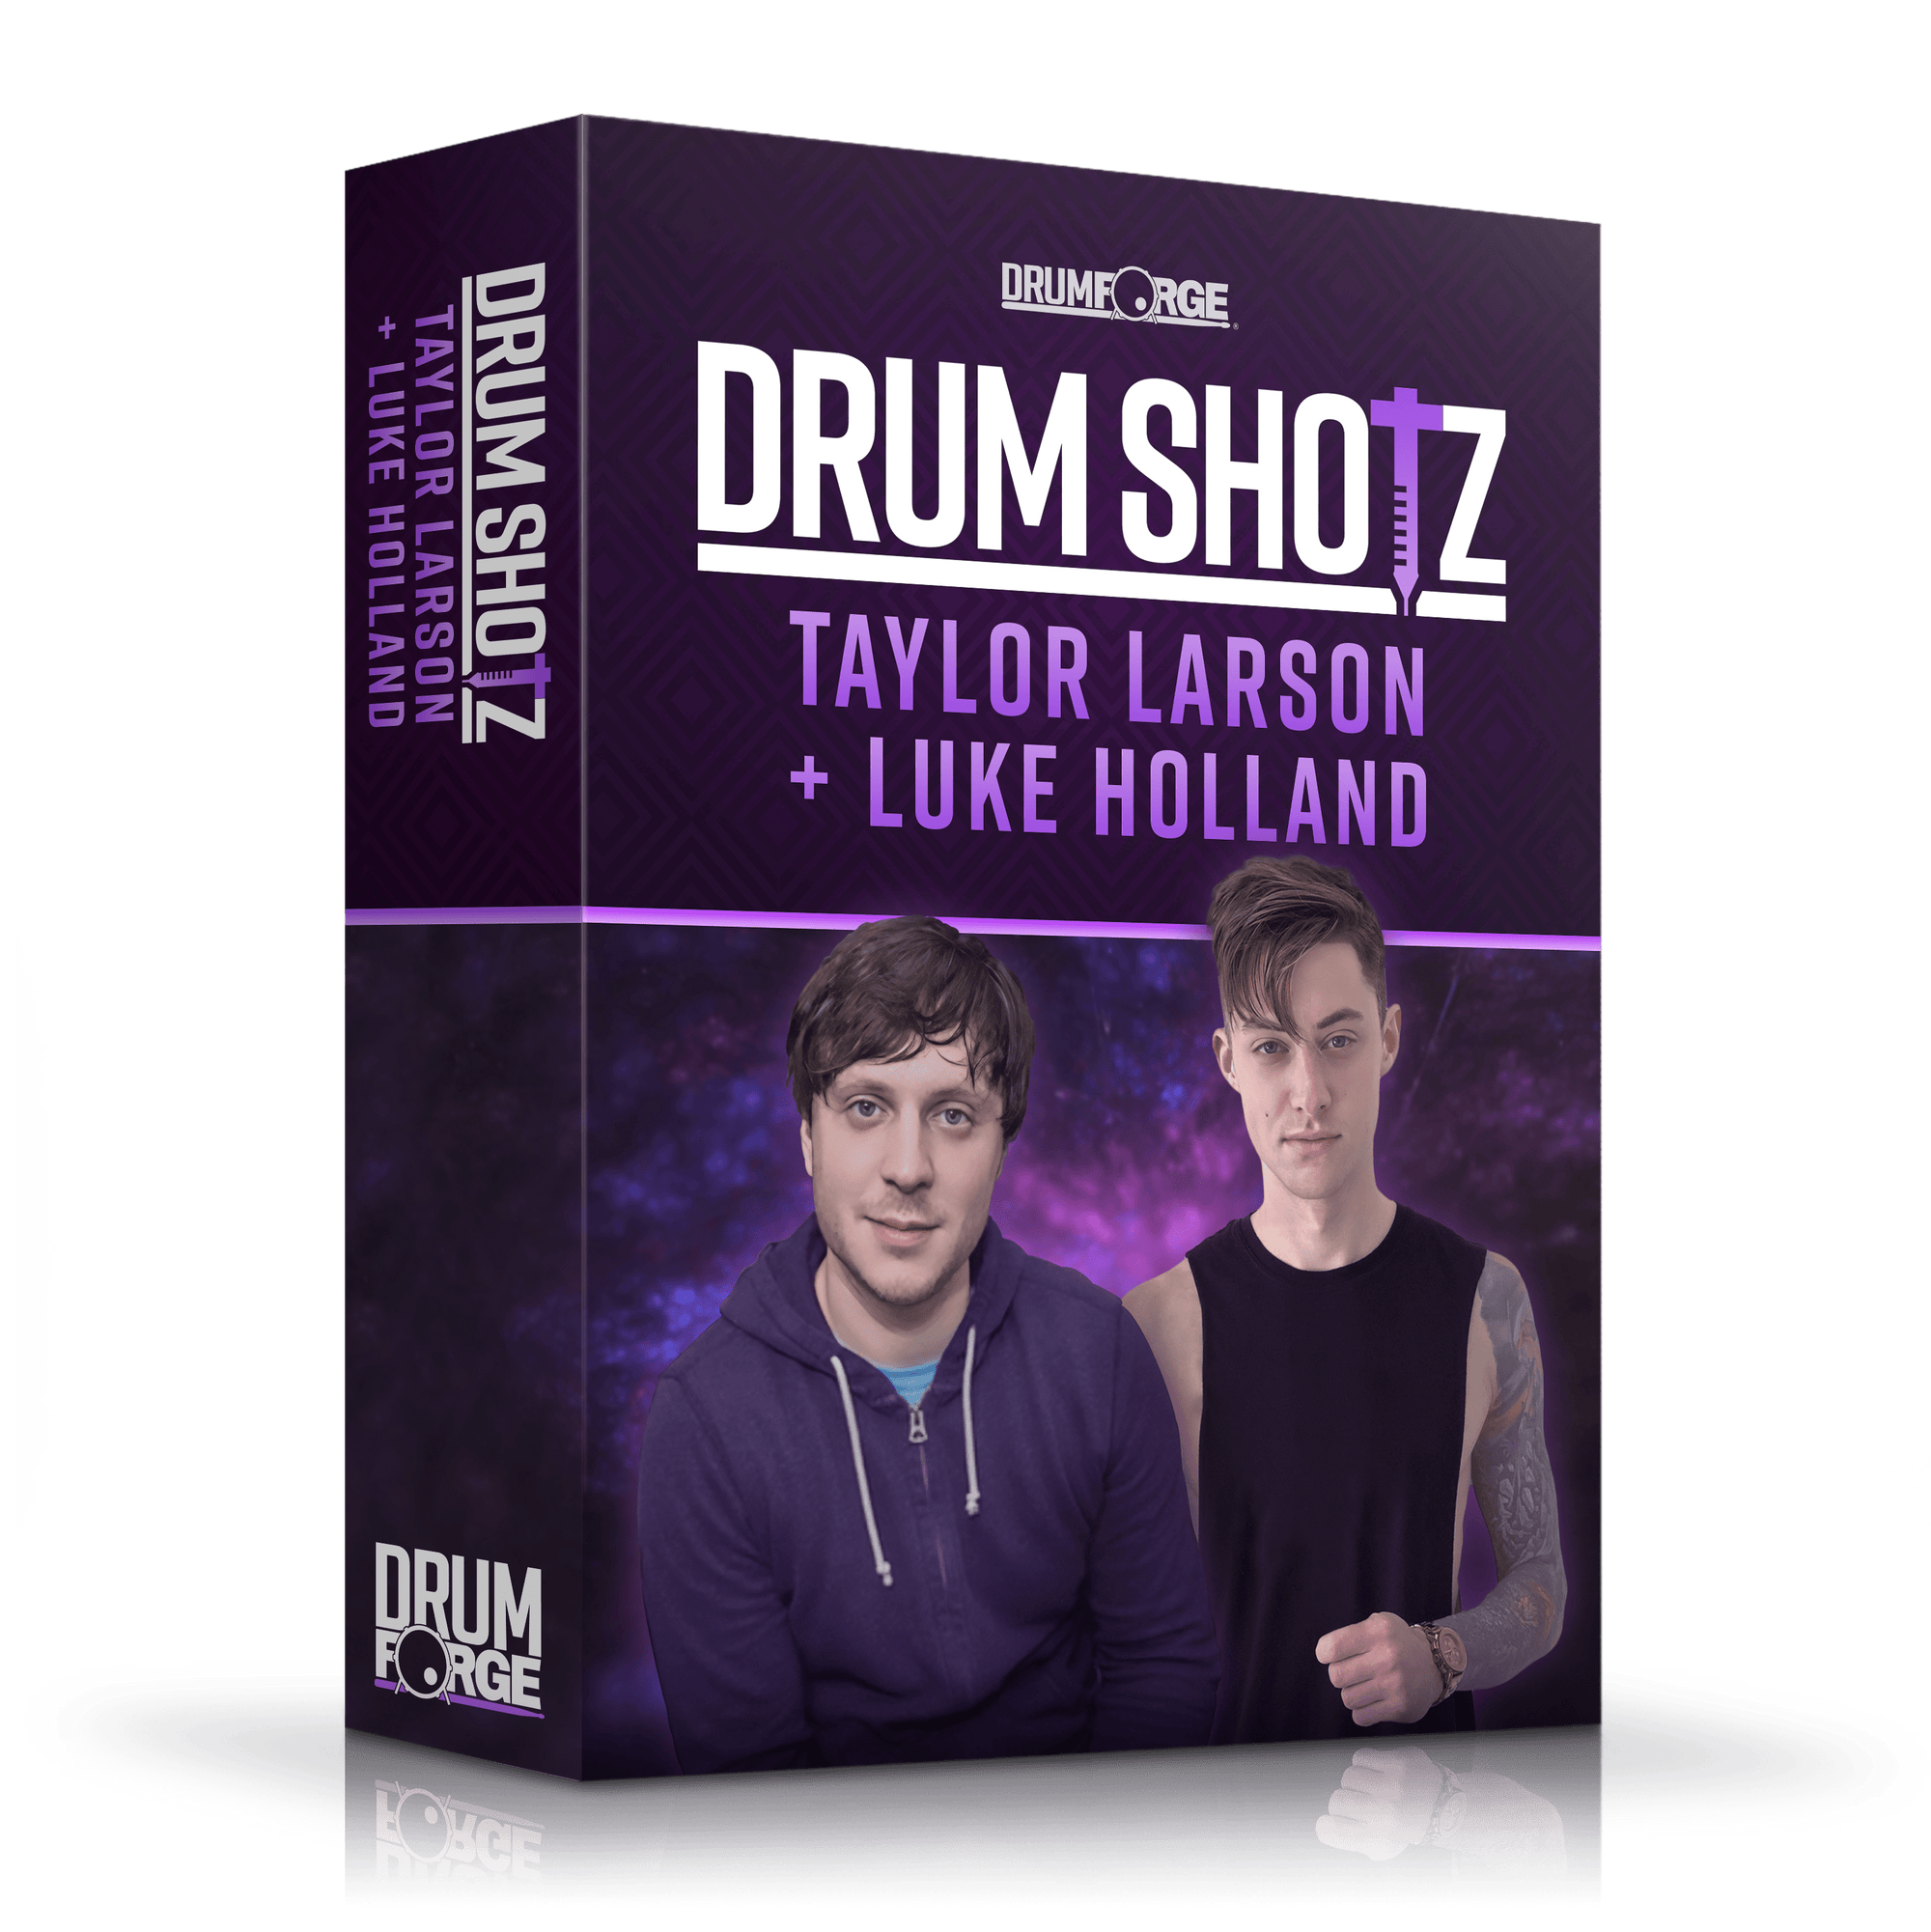 Drumshotz Taylor Larson & Luke Holland